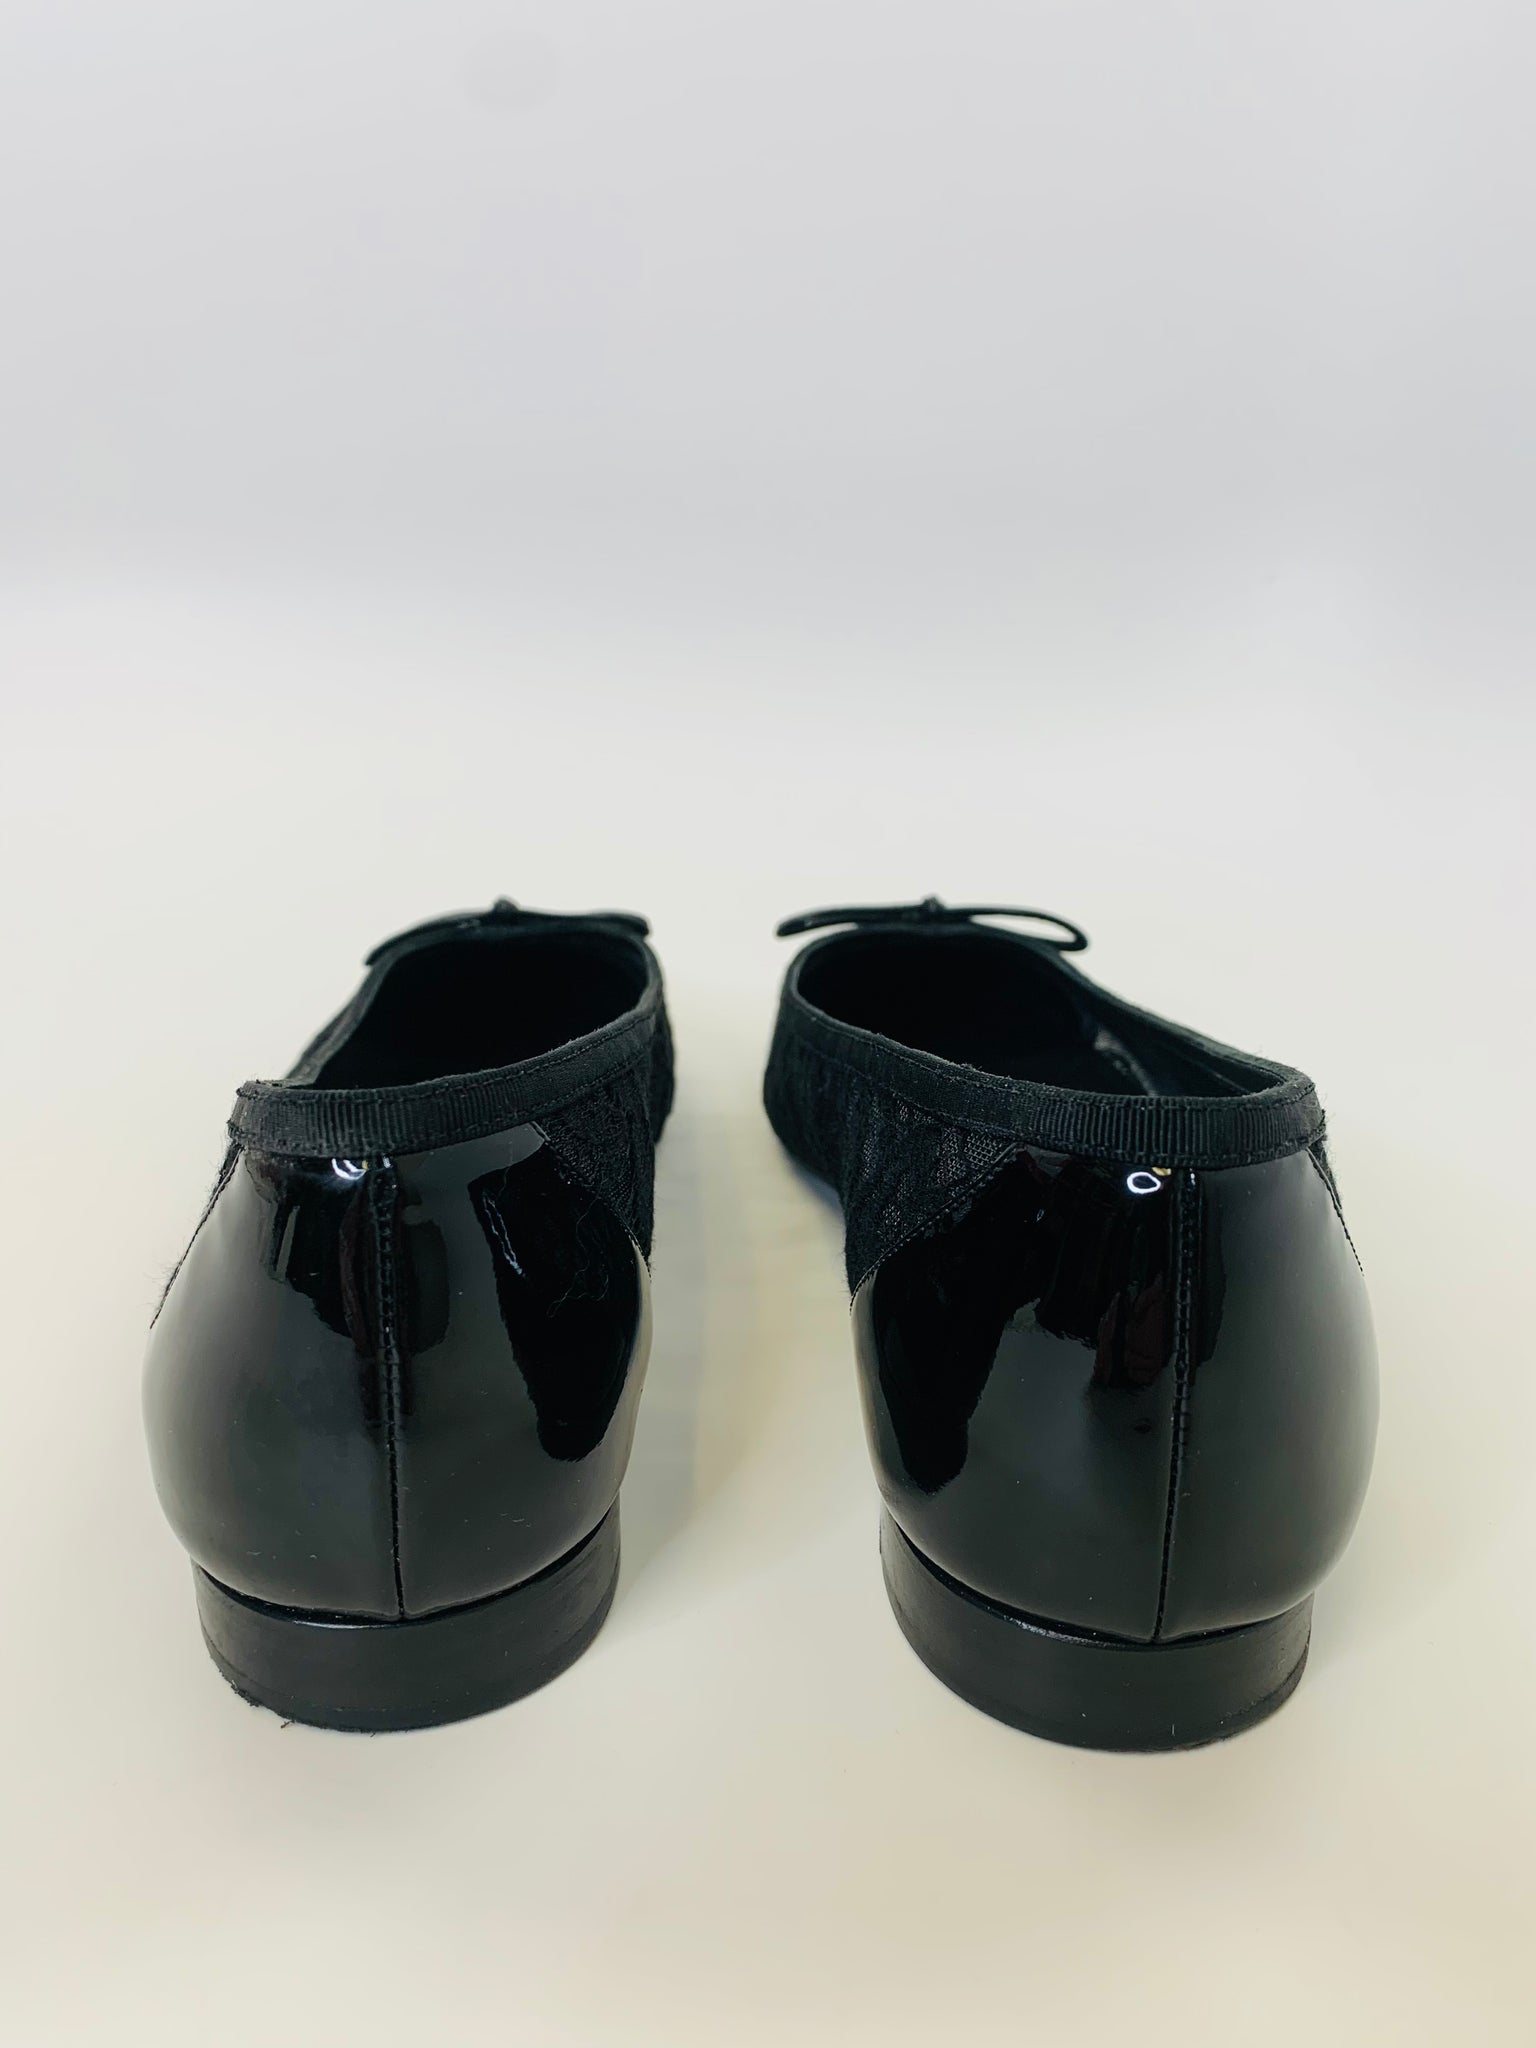 CHANEL Black Lace Ballerina Flats Size 38 1/2 – JDEX Styles